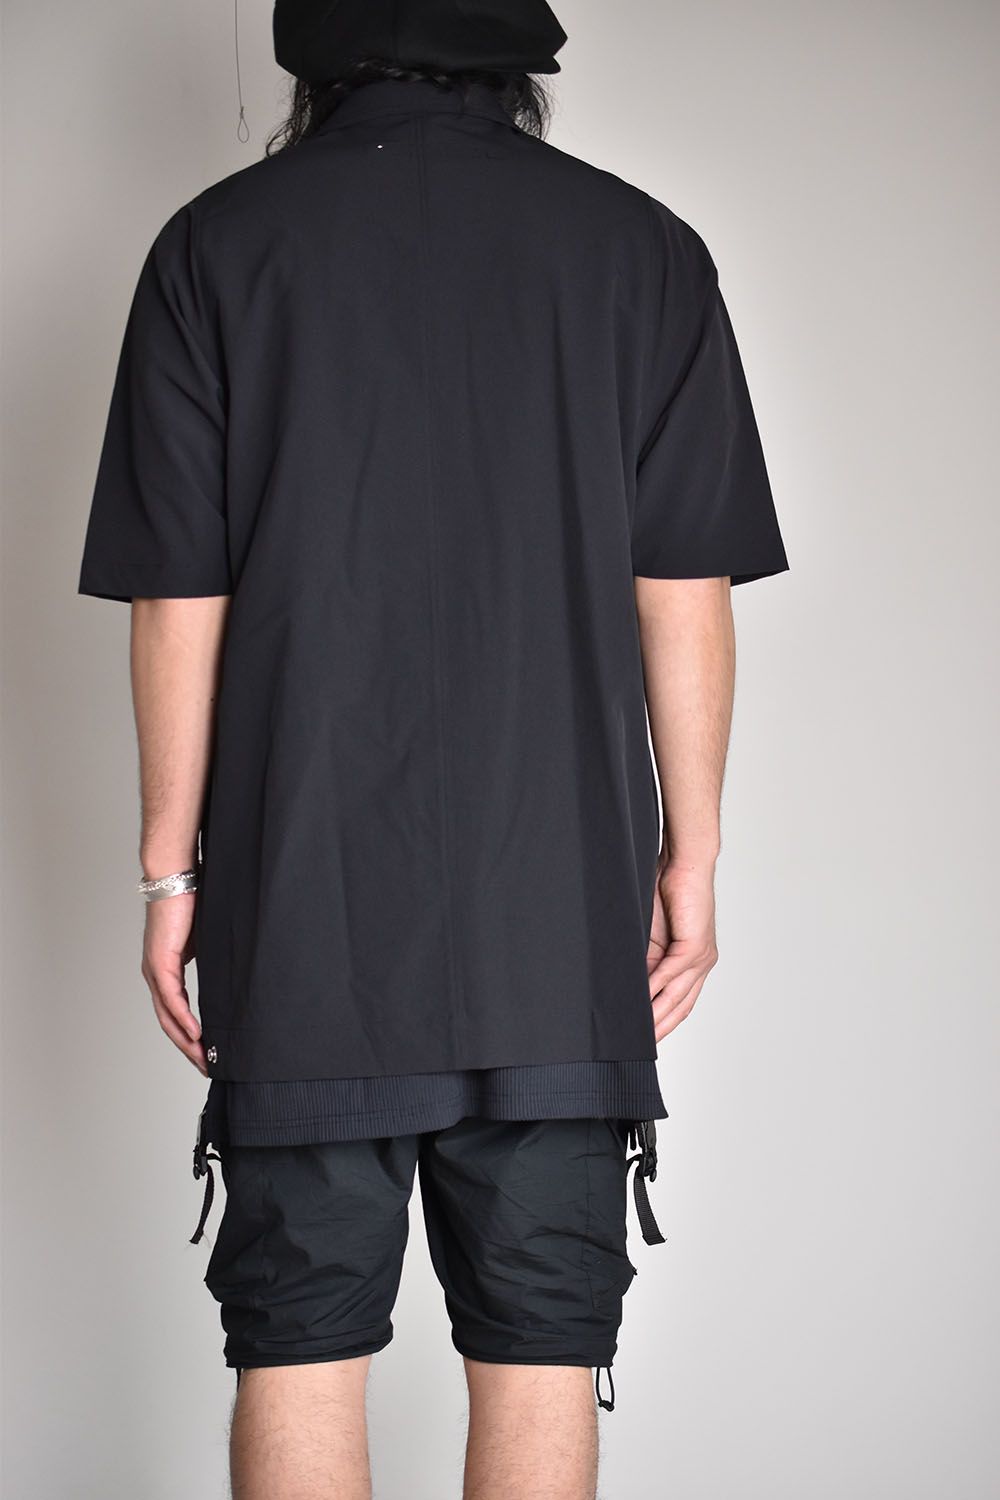 Half Sleeve Shirts"Black"/ハーフスリーブシャツ"ブラック"